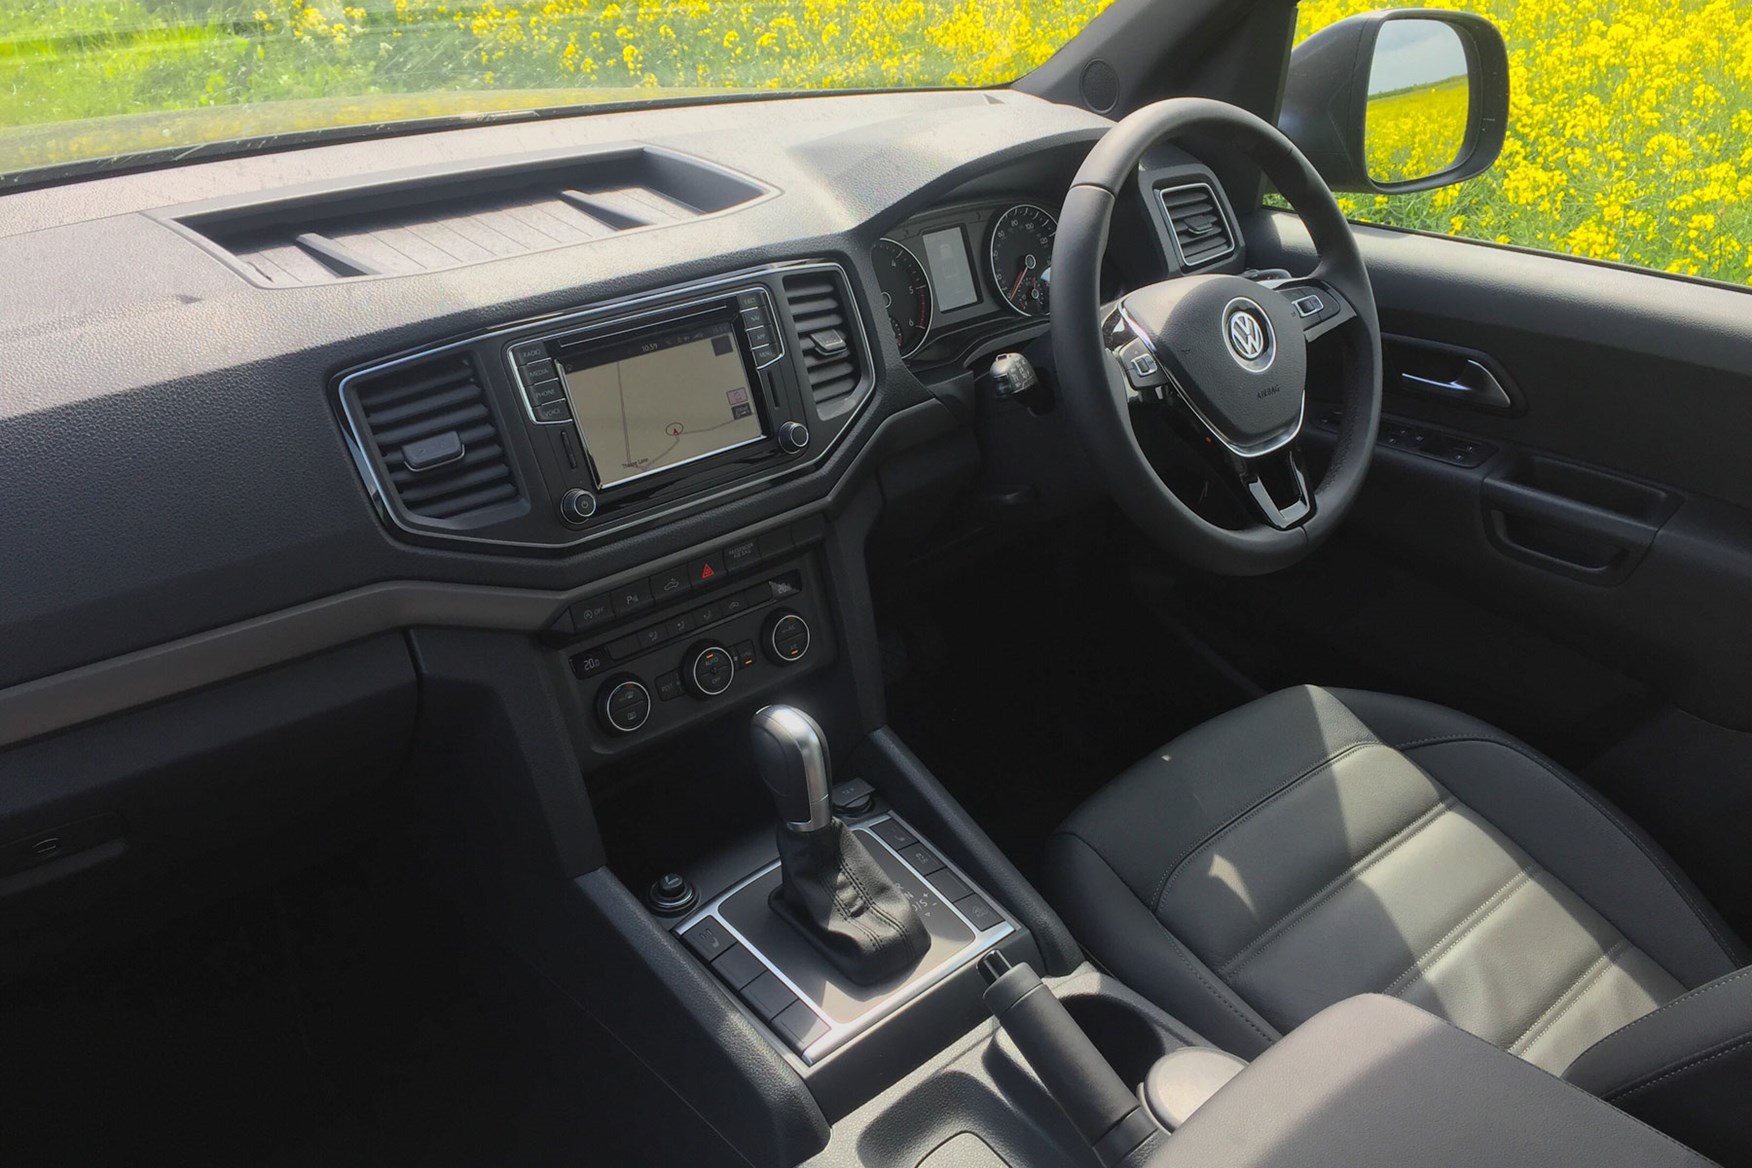 VW Amarok Dark Label review - cab interior